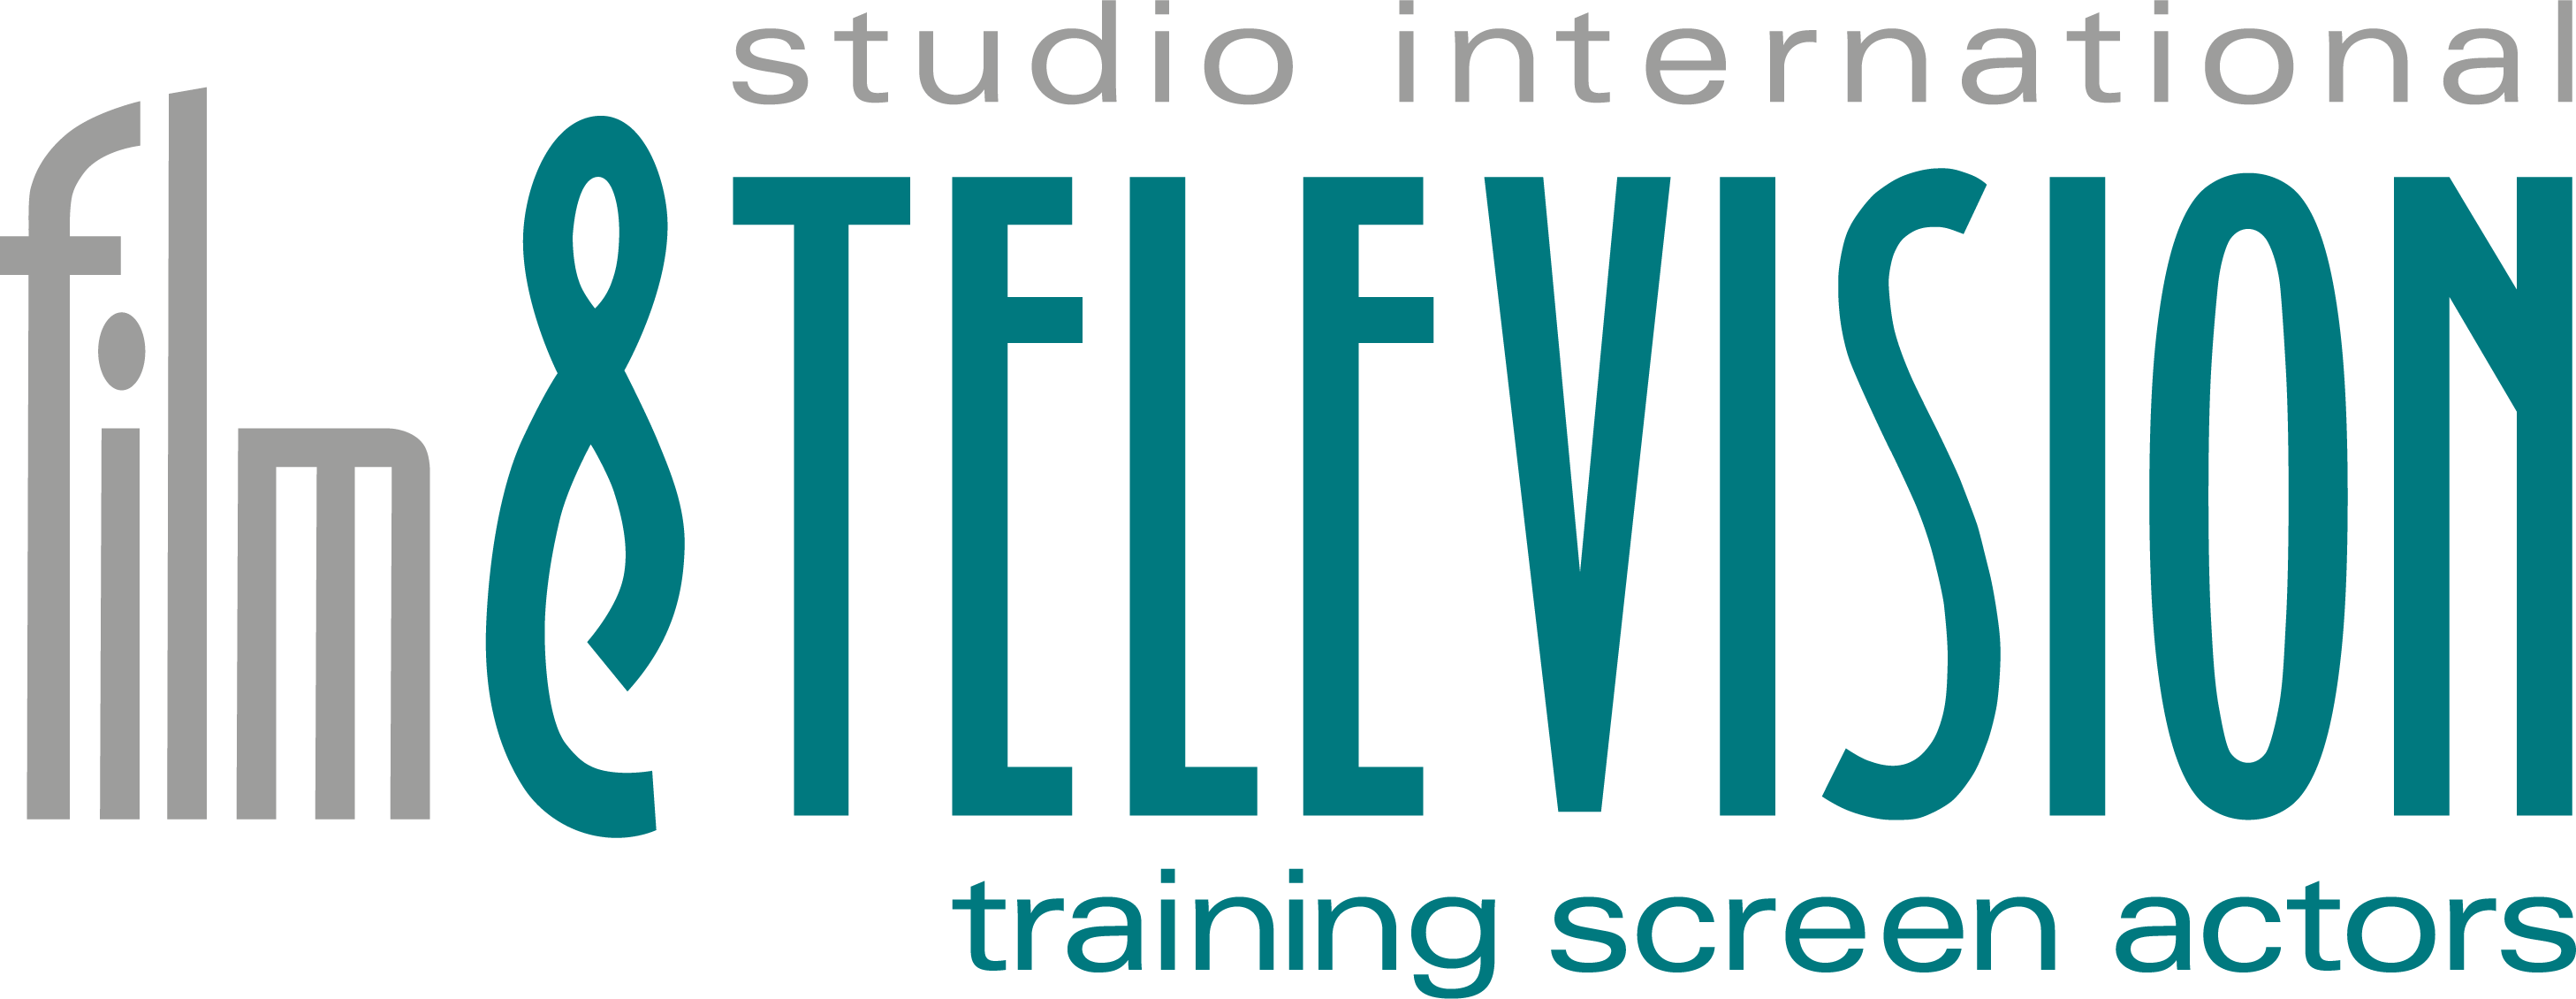 Film & Television Studio International